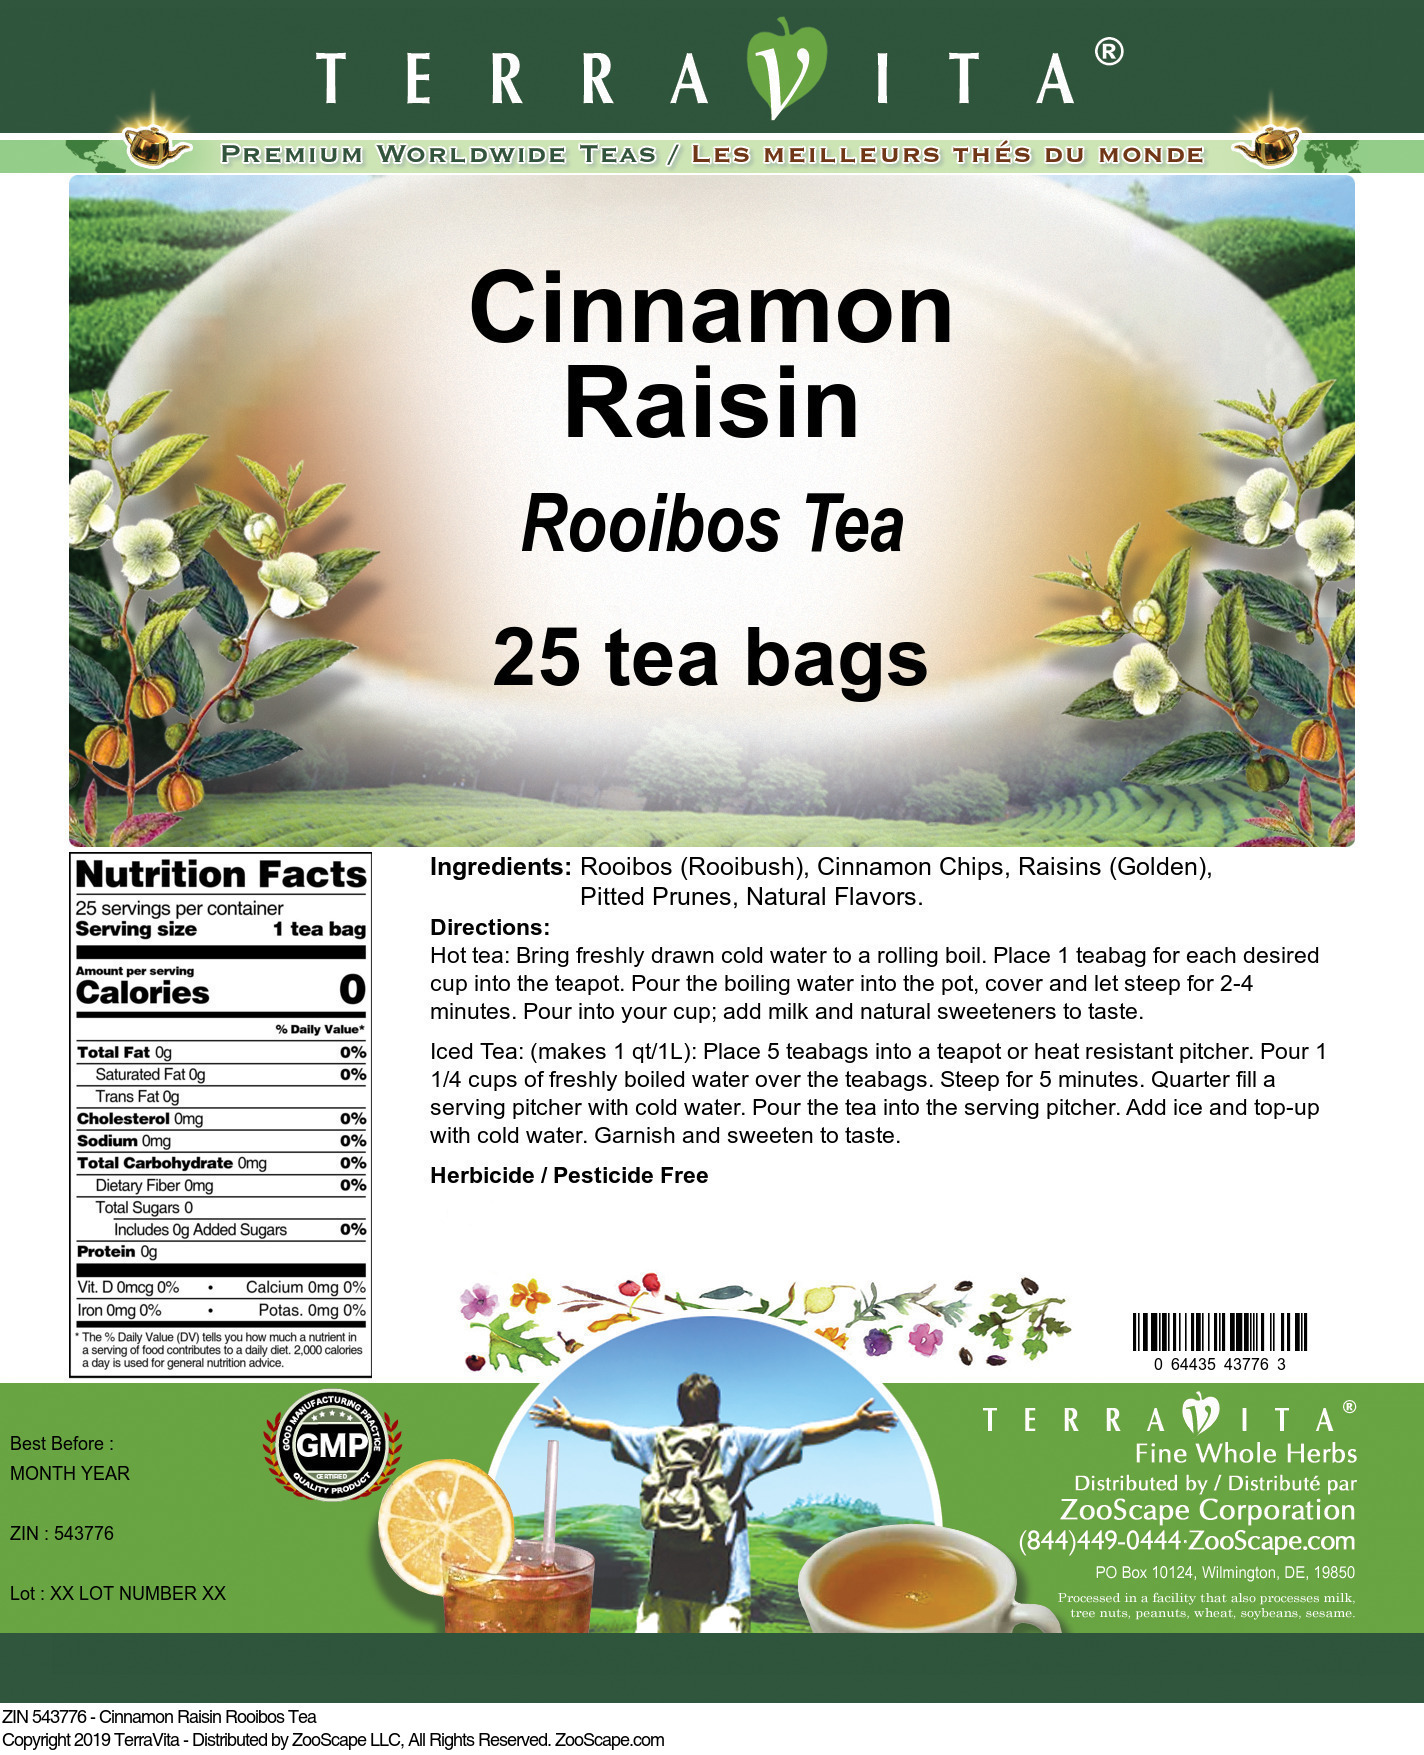 Cinnamon Raisin Rooibos Tea - Label